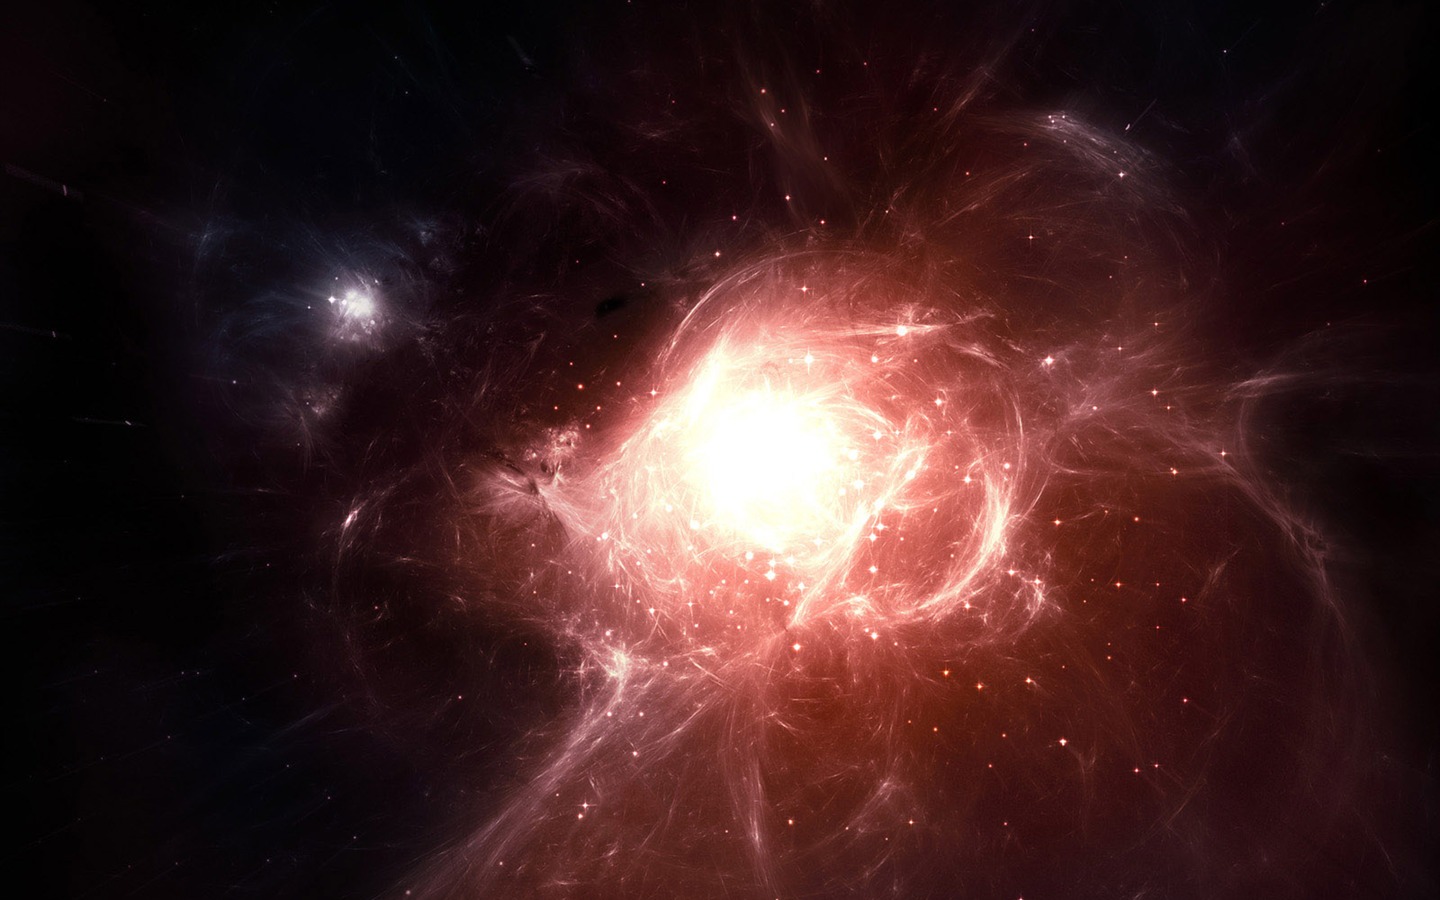 Infinito Universo, la bella estrella de Escritorio #33 - 1440x900